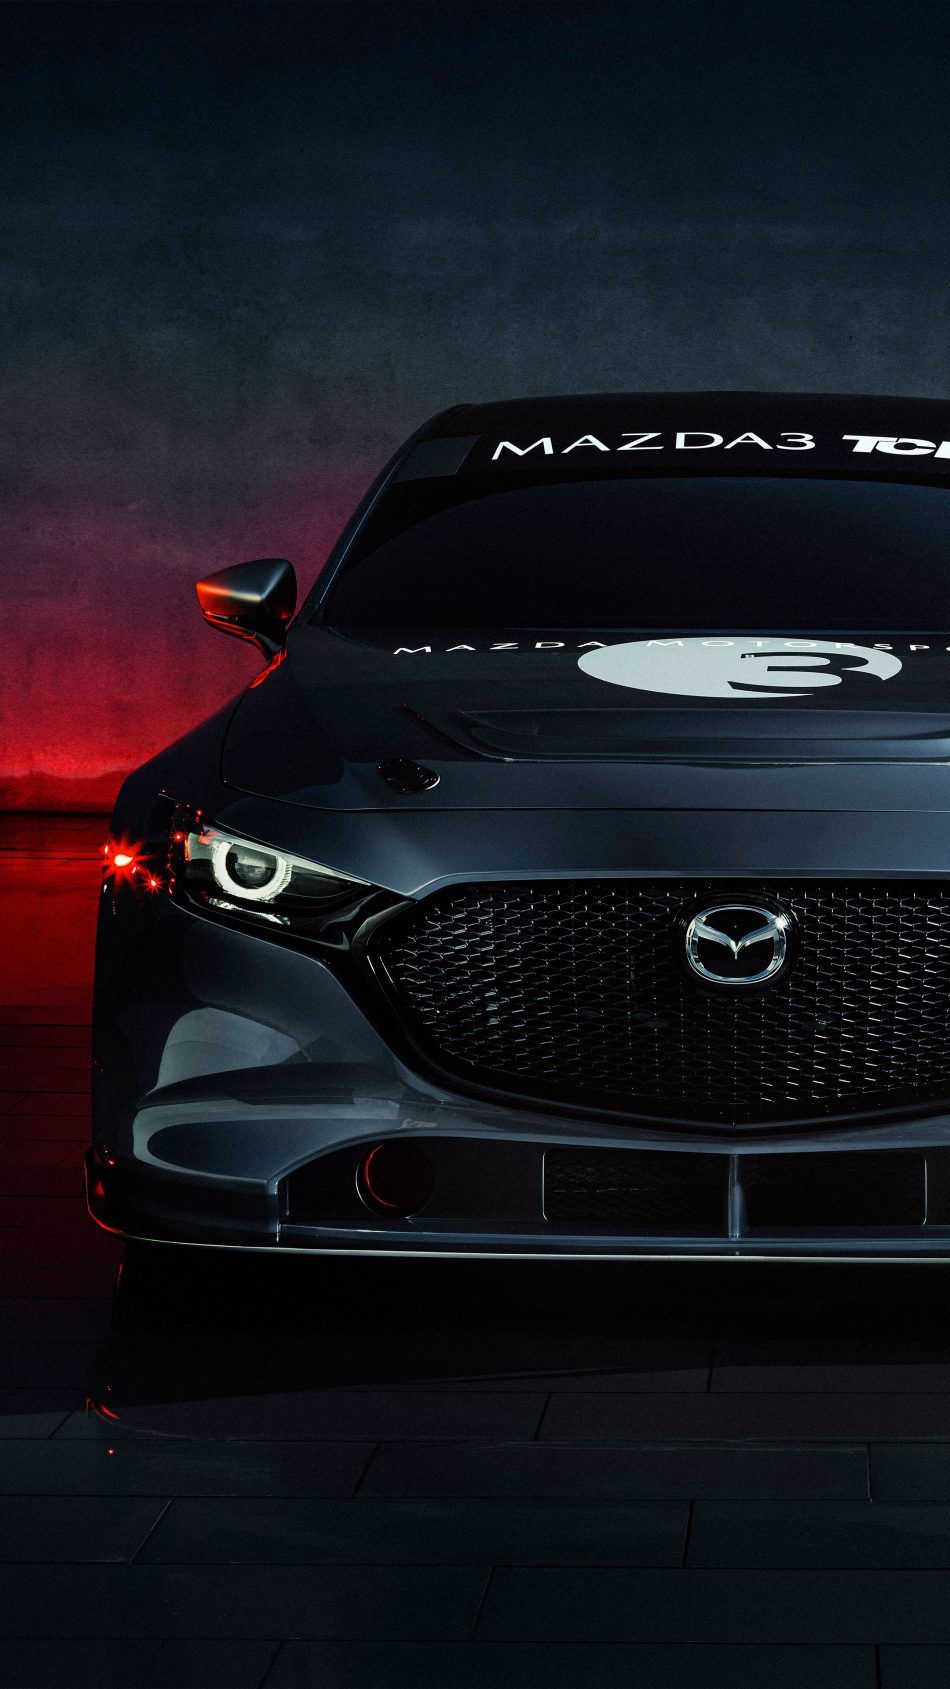 Mazda 3 TCR Race Car 2020 4K Ultra HD Мобильные обои | Mazda 3 Mazda 3 хэтчбек Mazda cars